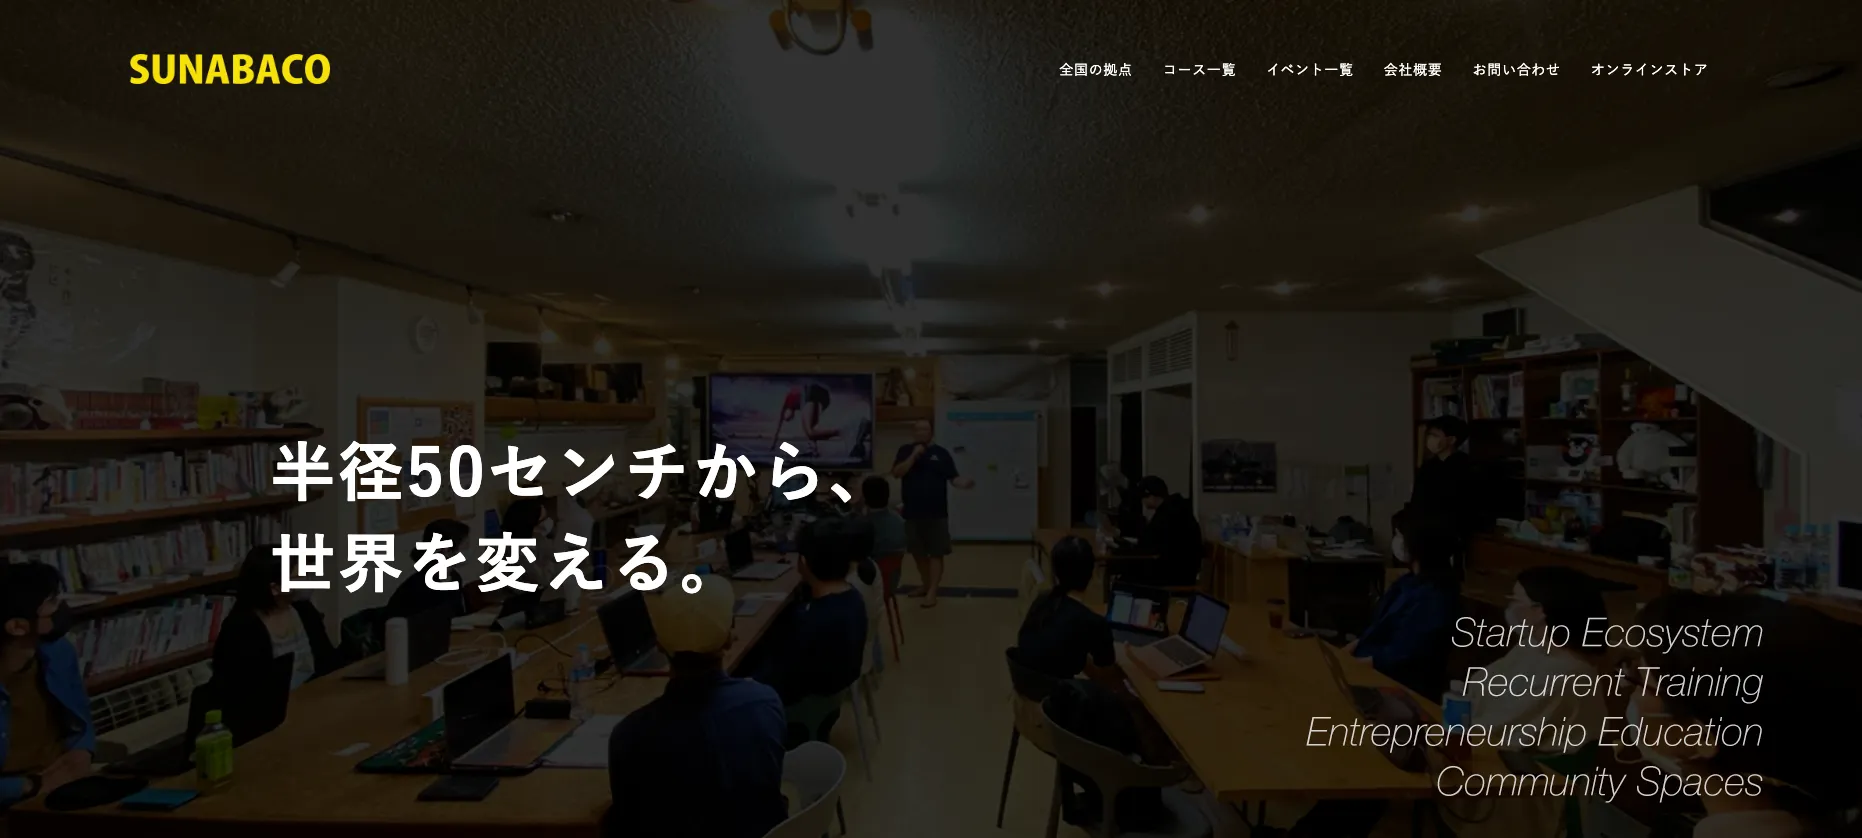 SUNABACOの公式ホームページ画像